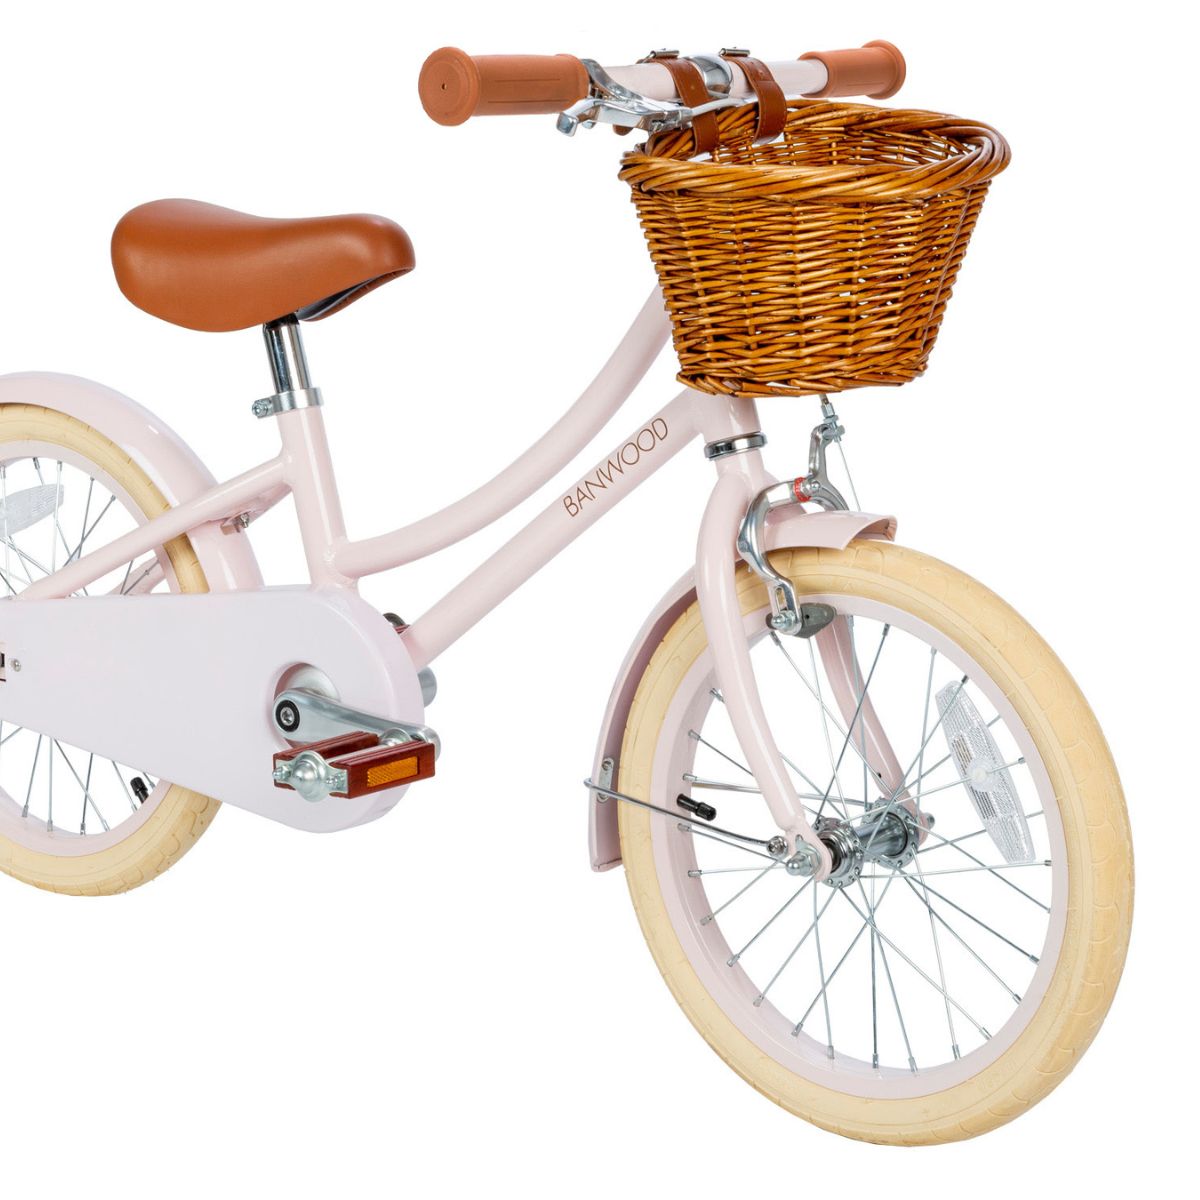 Bicicleta Banwood clásica vintage menta pálida